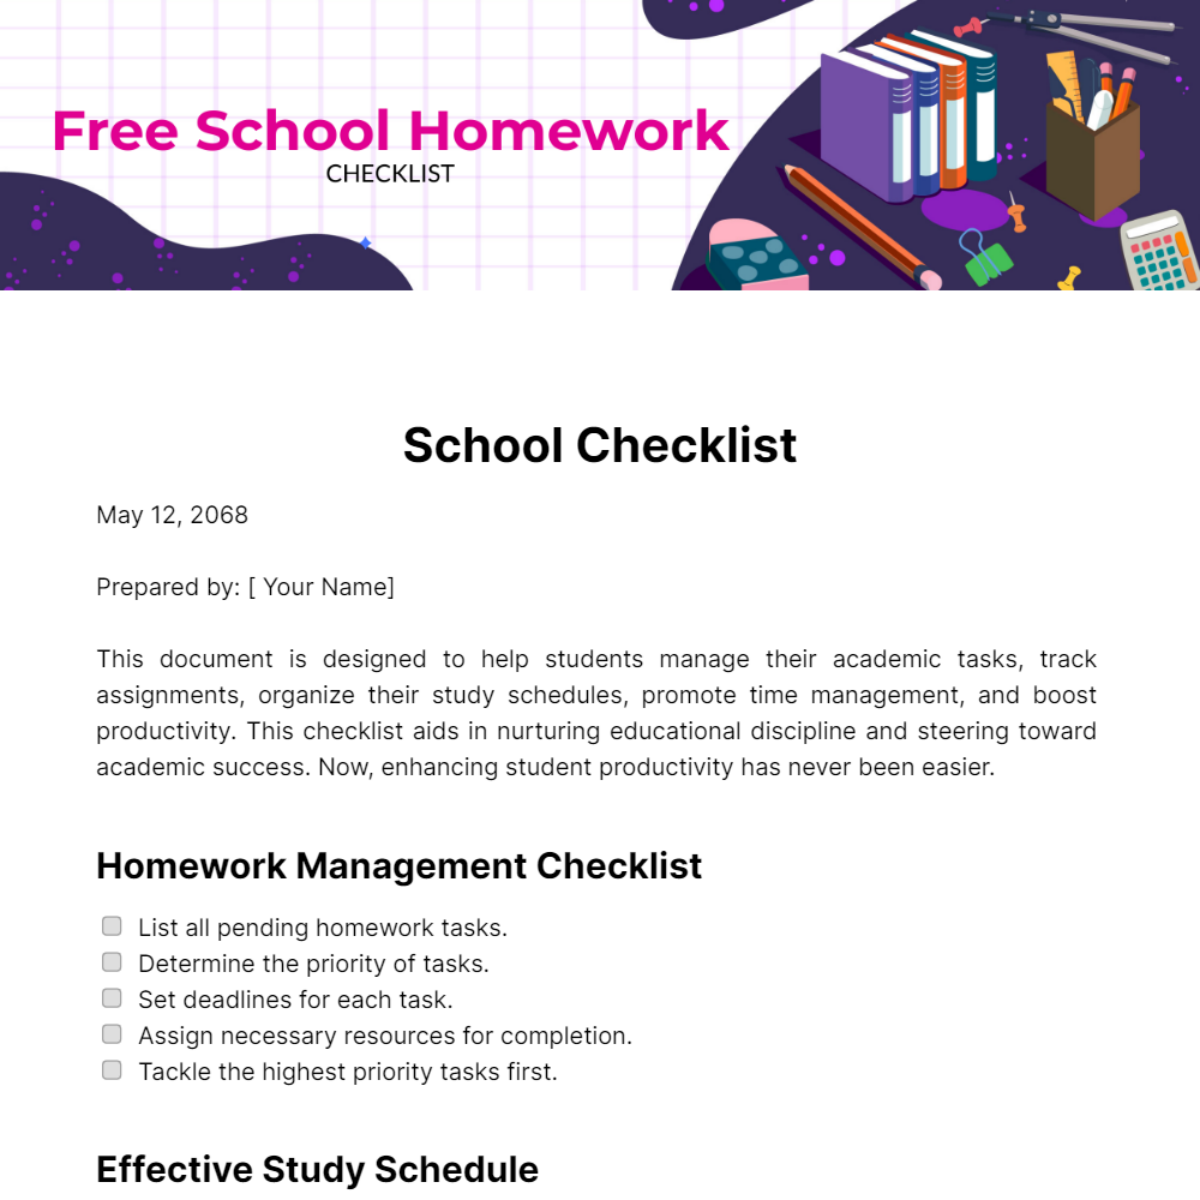 Free School Homework Checklist Template